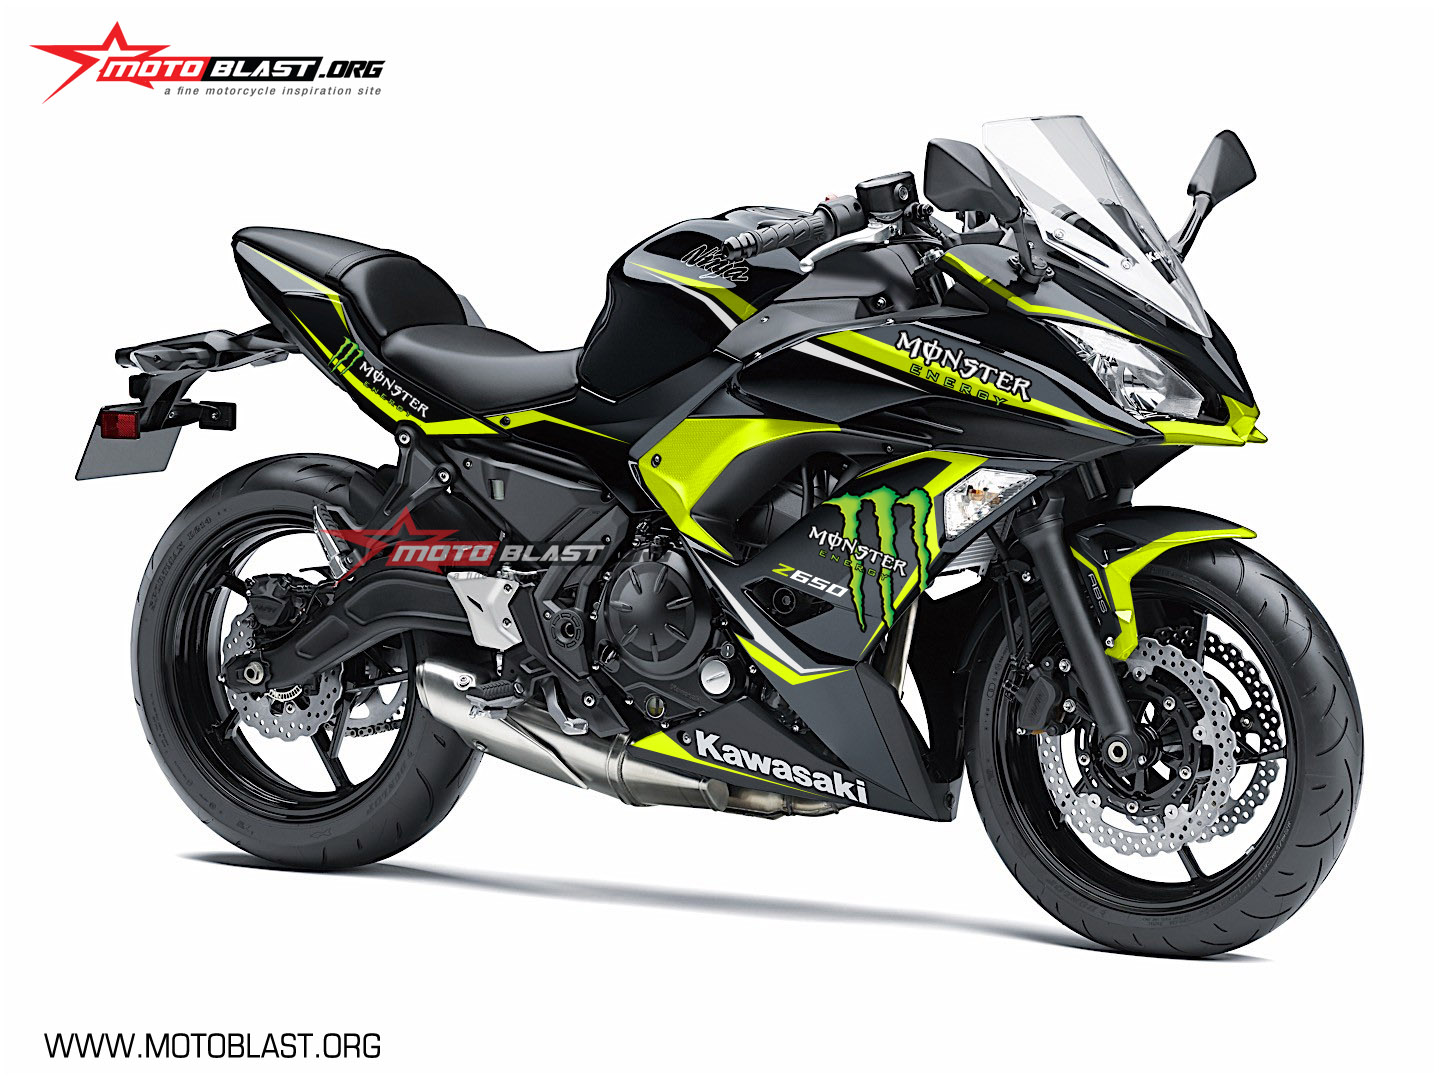 Modifikasi Striping Kawasaki Ninja 650 2017 Black Monster